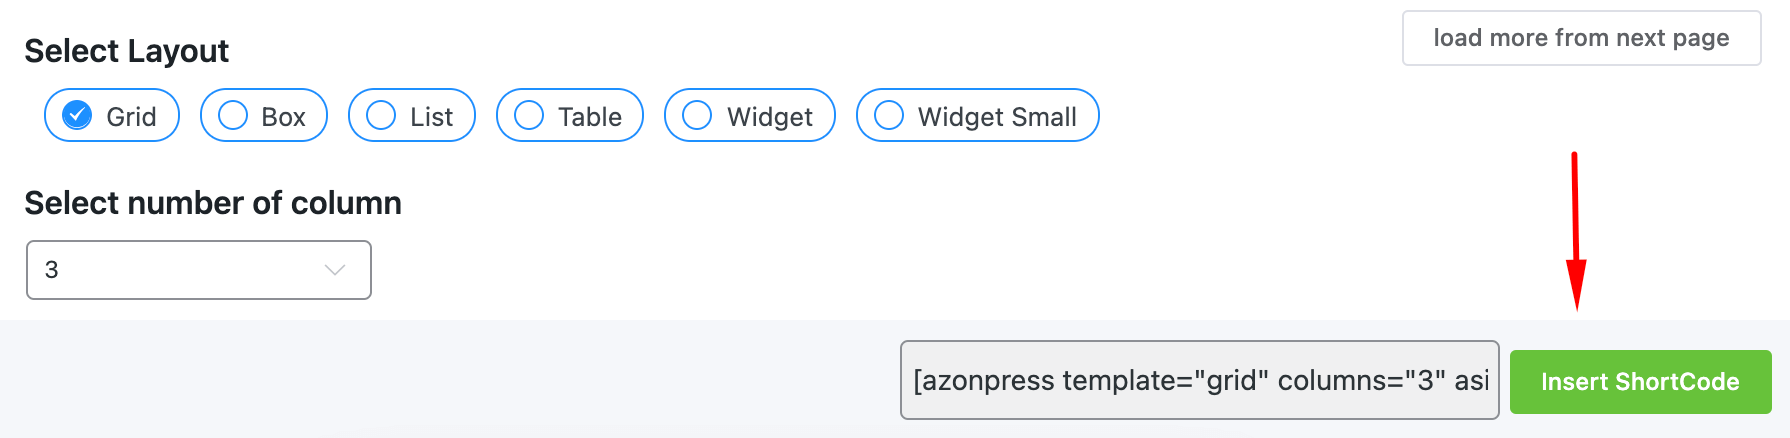 Azonpress-Insert-Shortcode